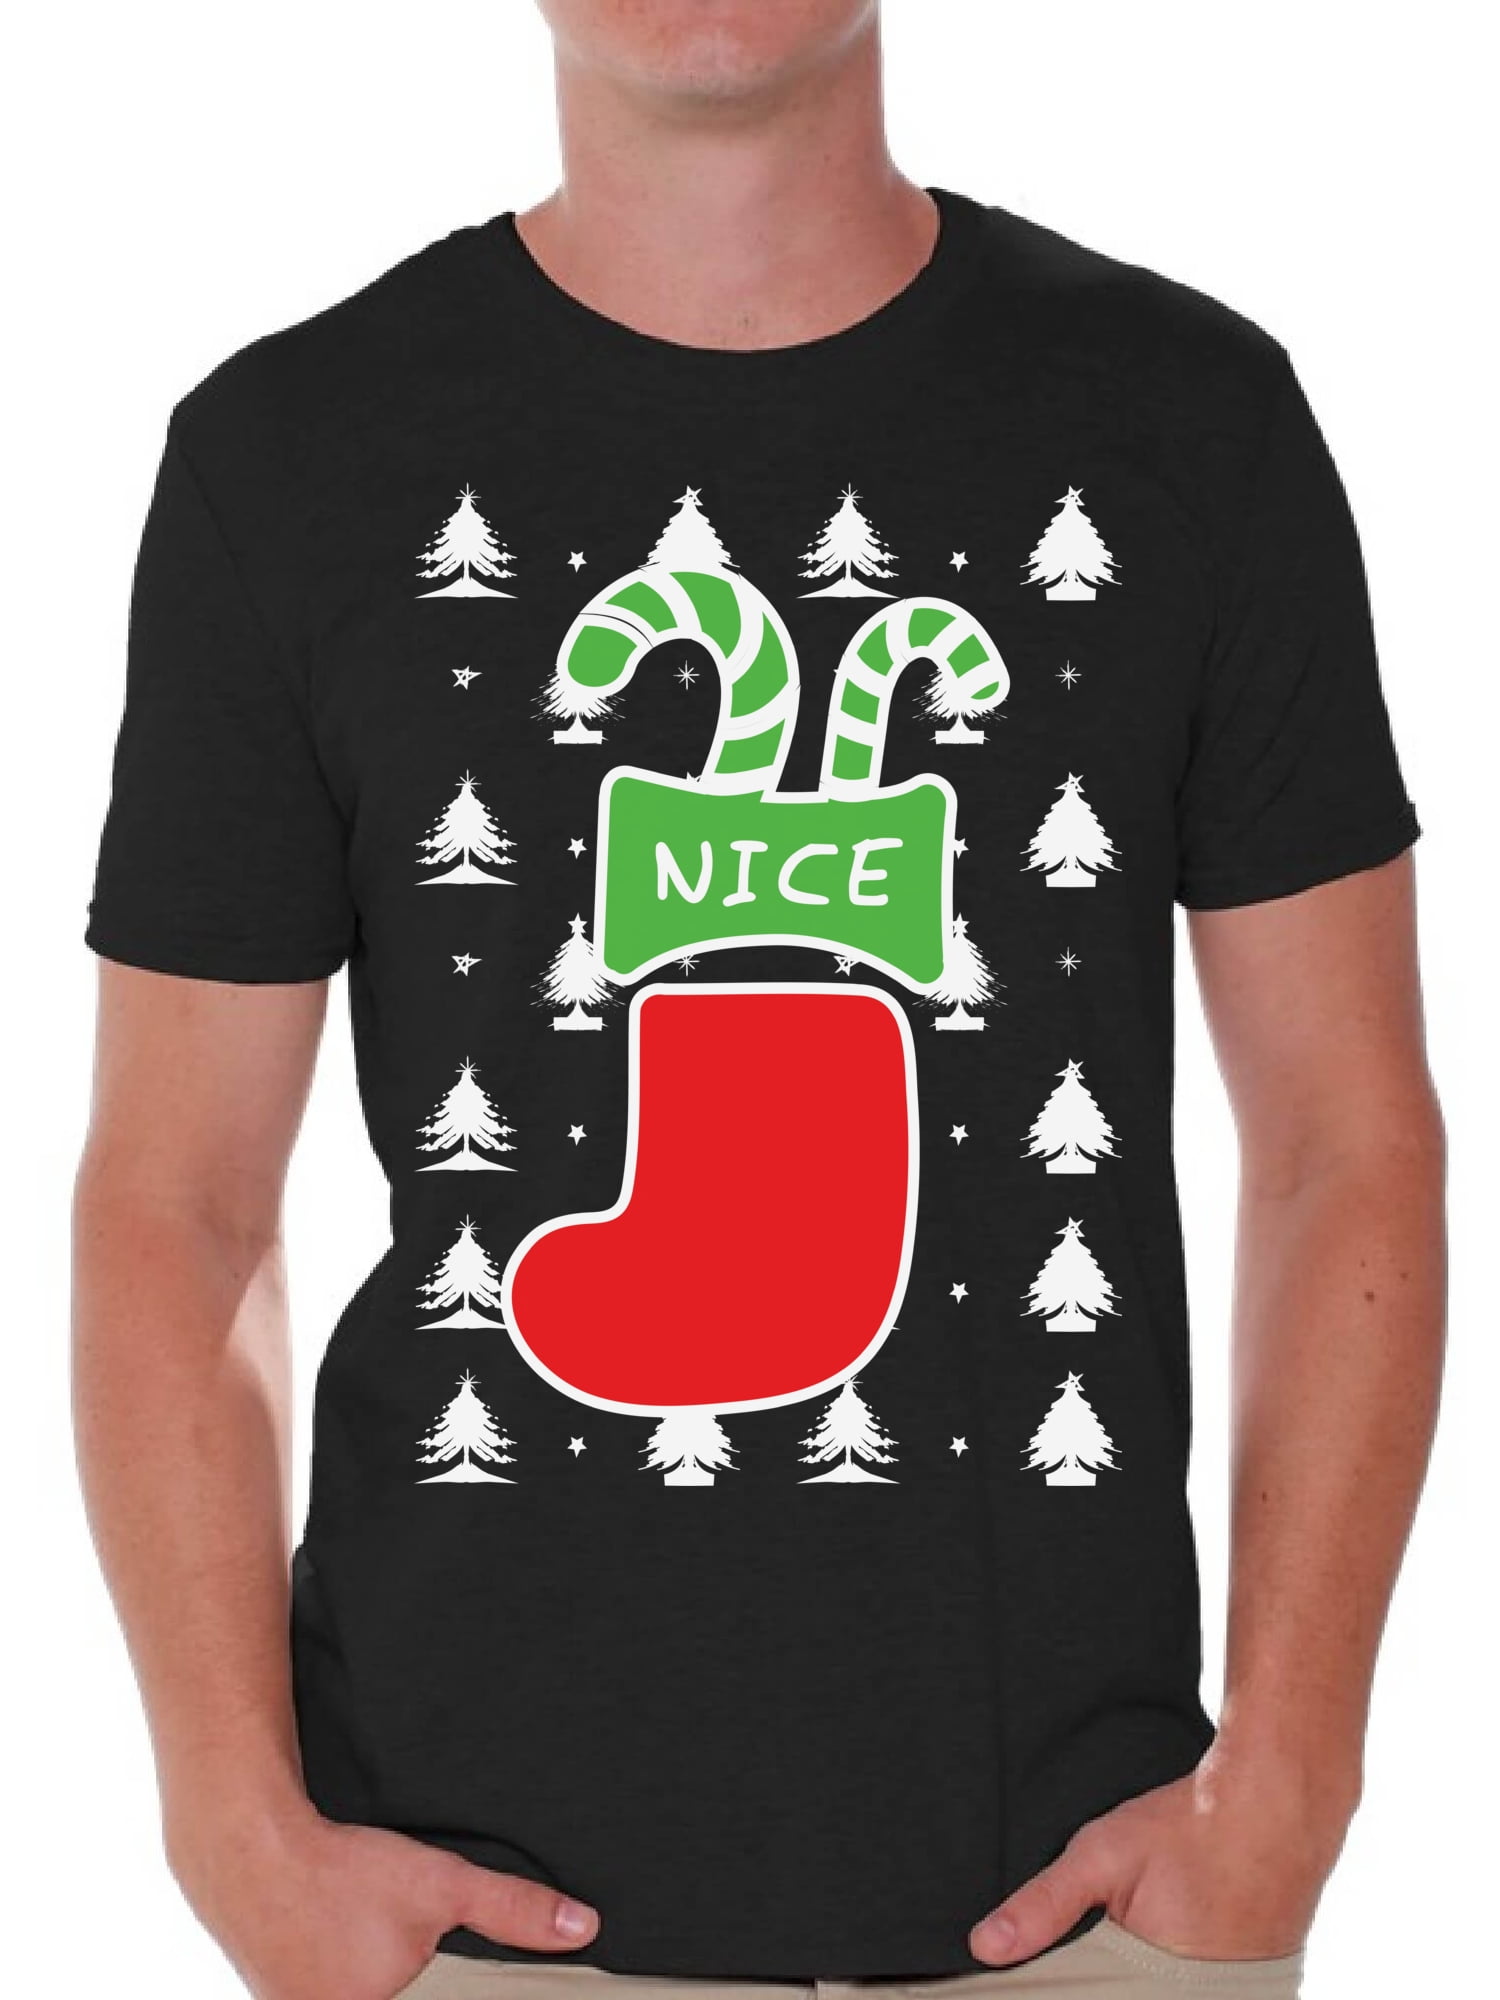 I Love Xmas V-Neck T-shirt Christmas Tree Holiday Spirit Naughty or Nice Tee